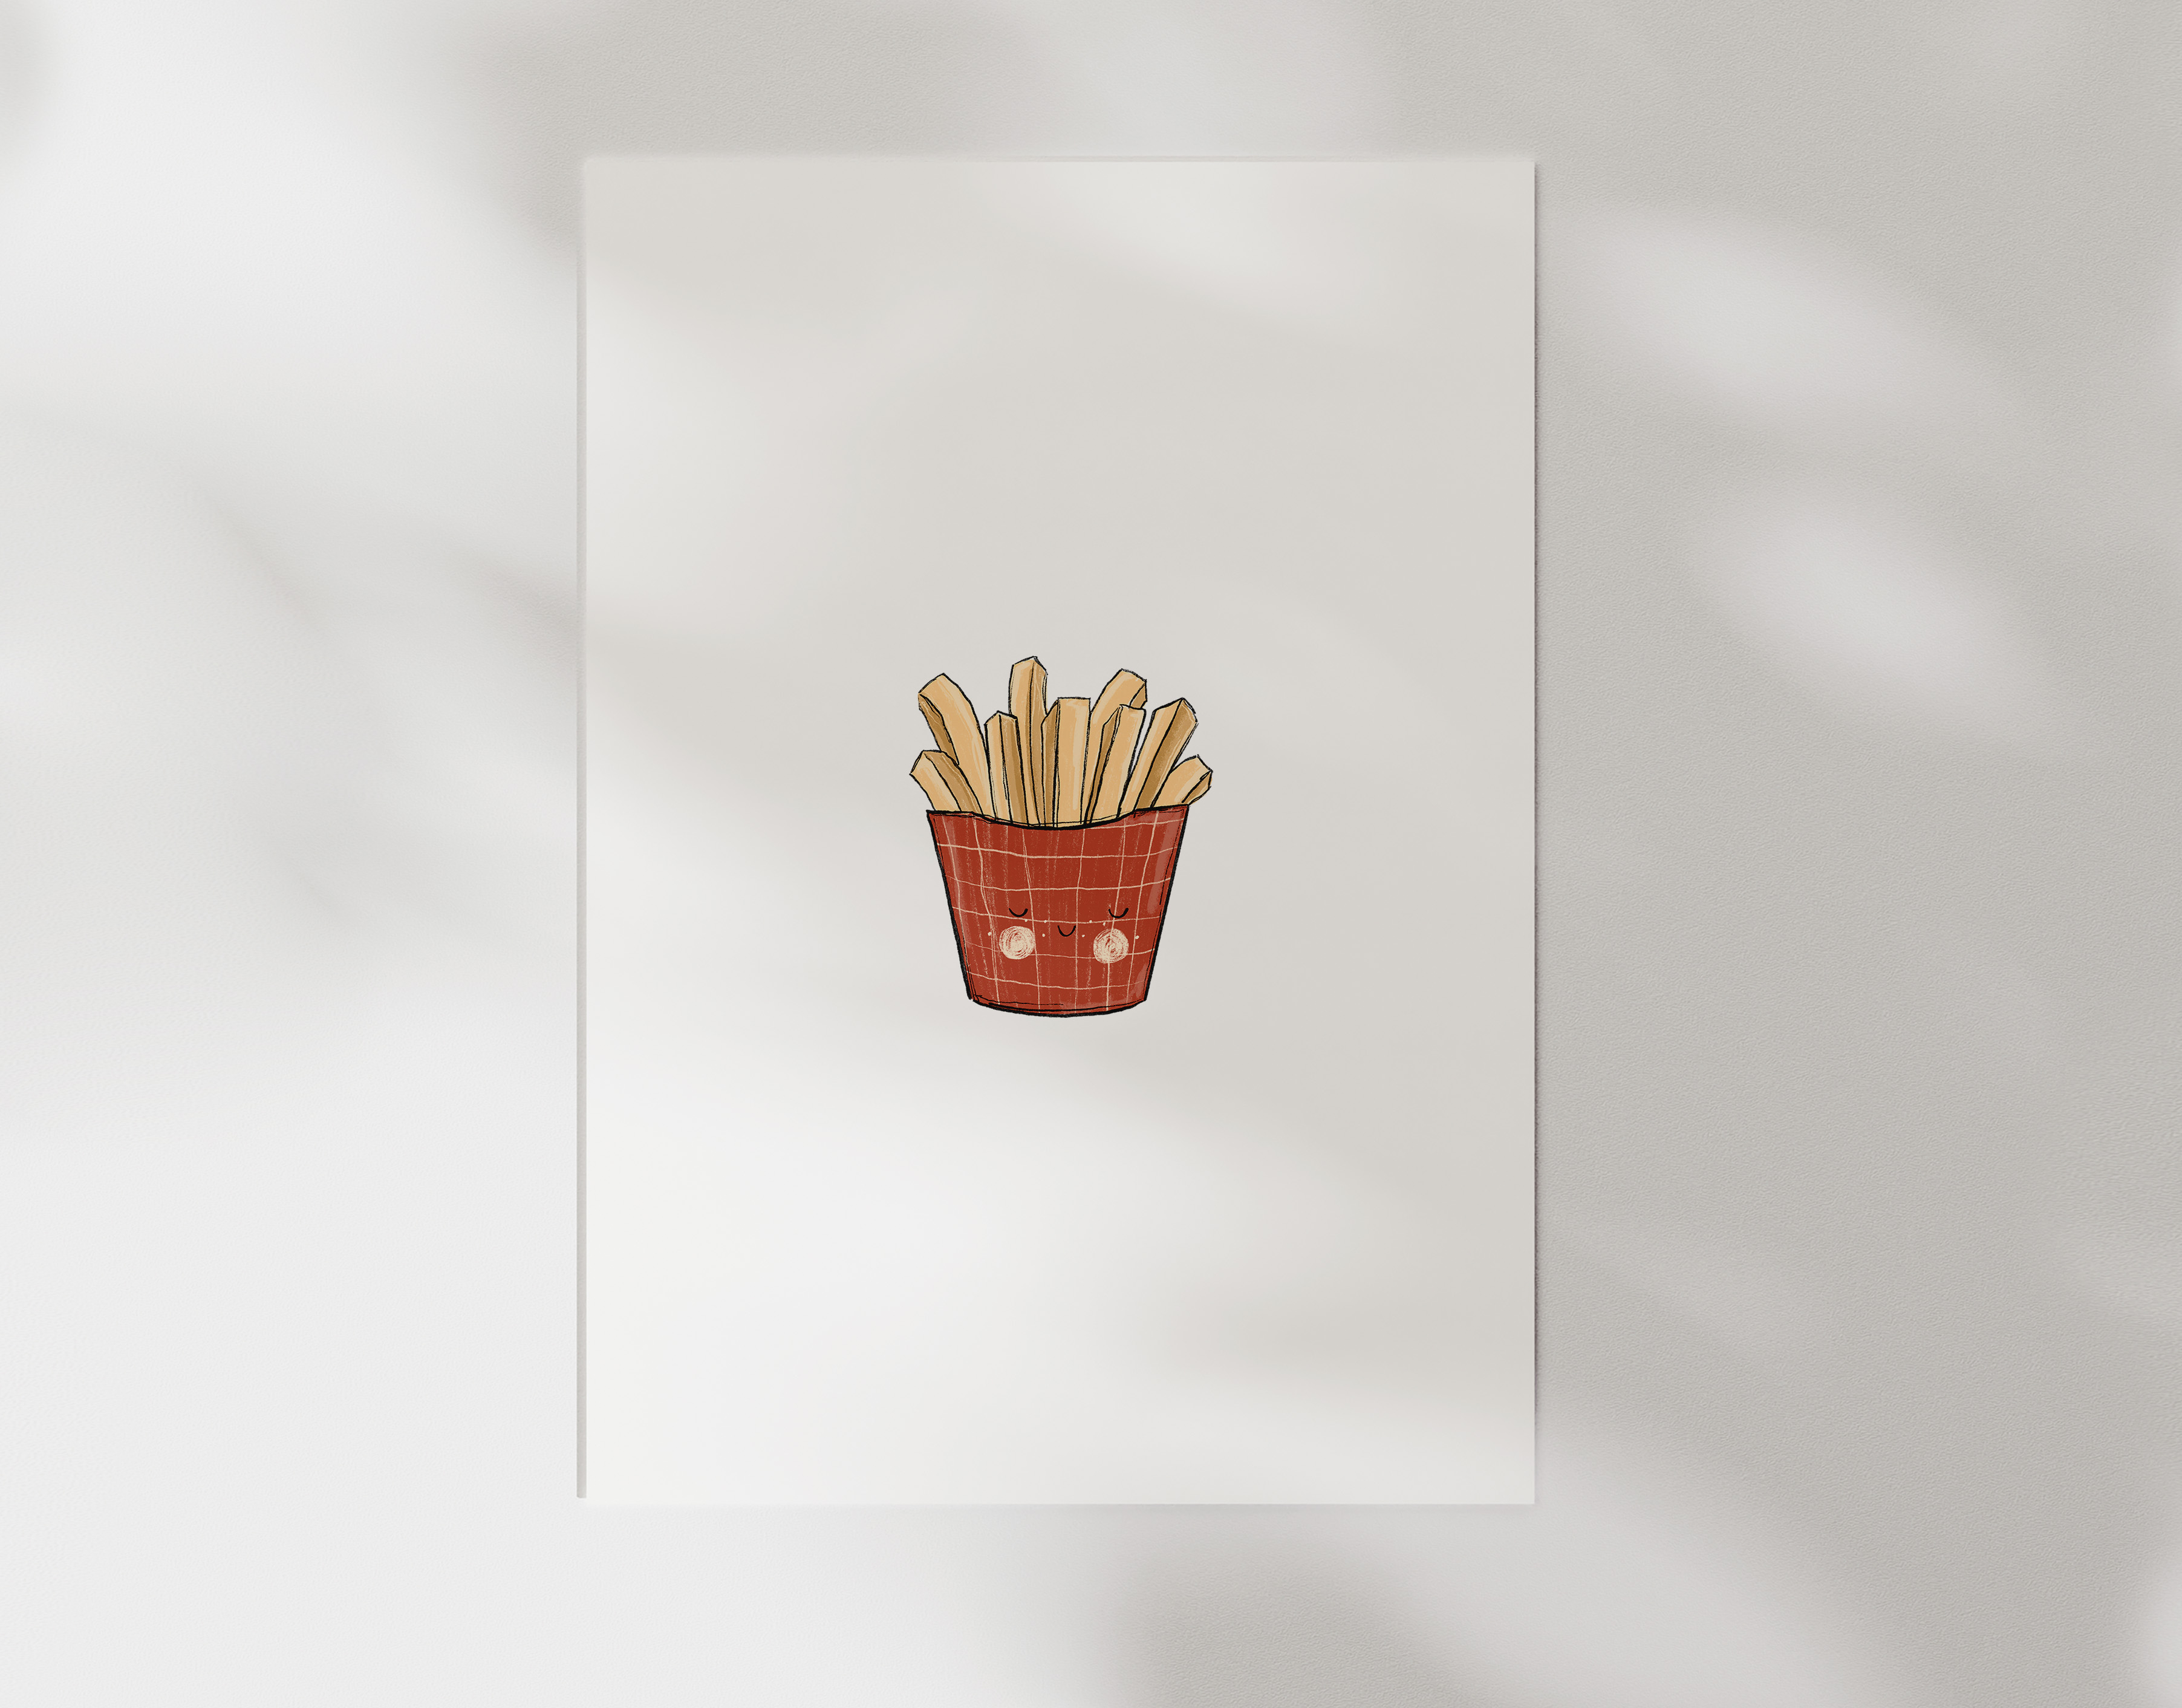 Bügelbild Pommesliebe Pommestüte Kollektion Eat & Love ca. 7x8,5 cm BxH 